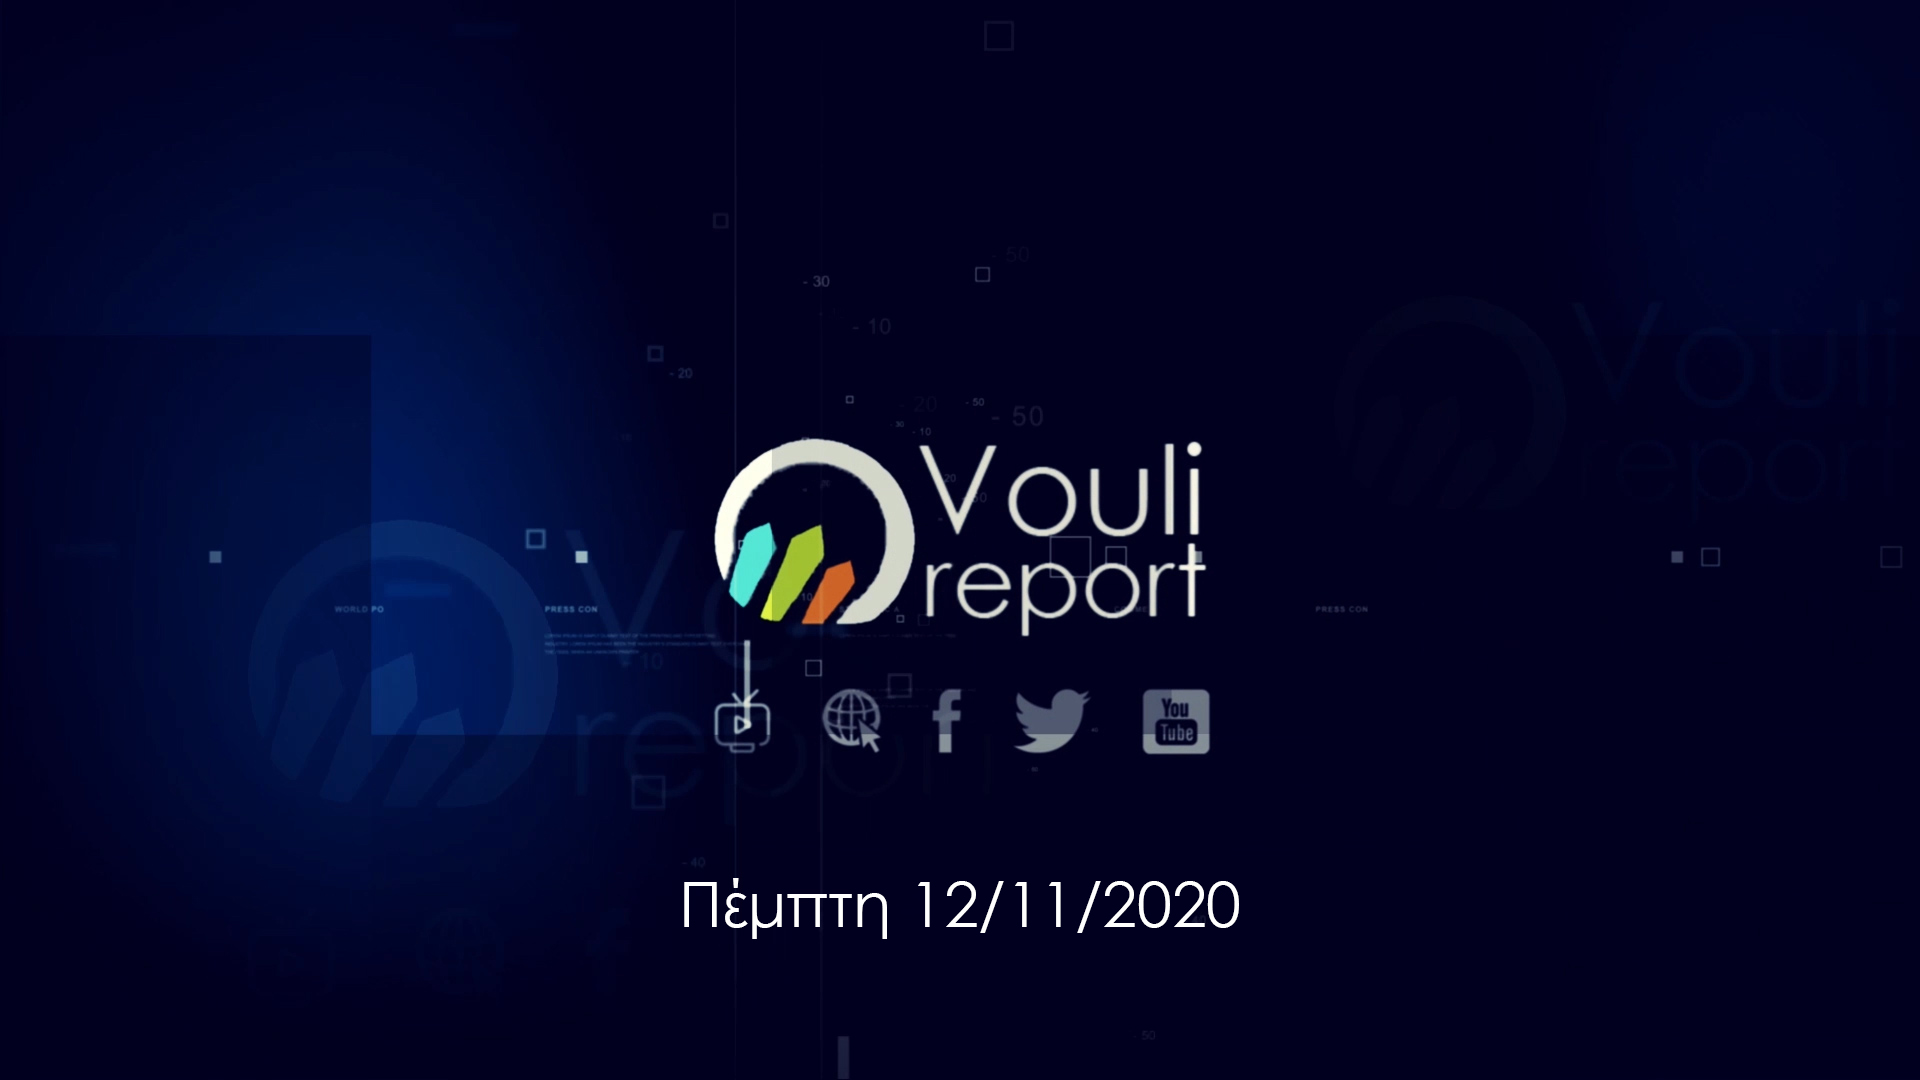 Vouli report | 12/11/2020